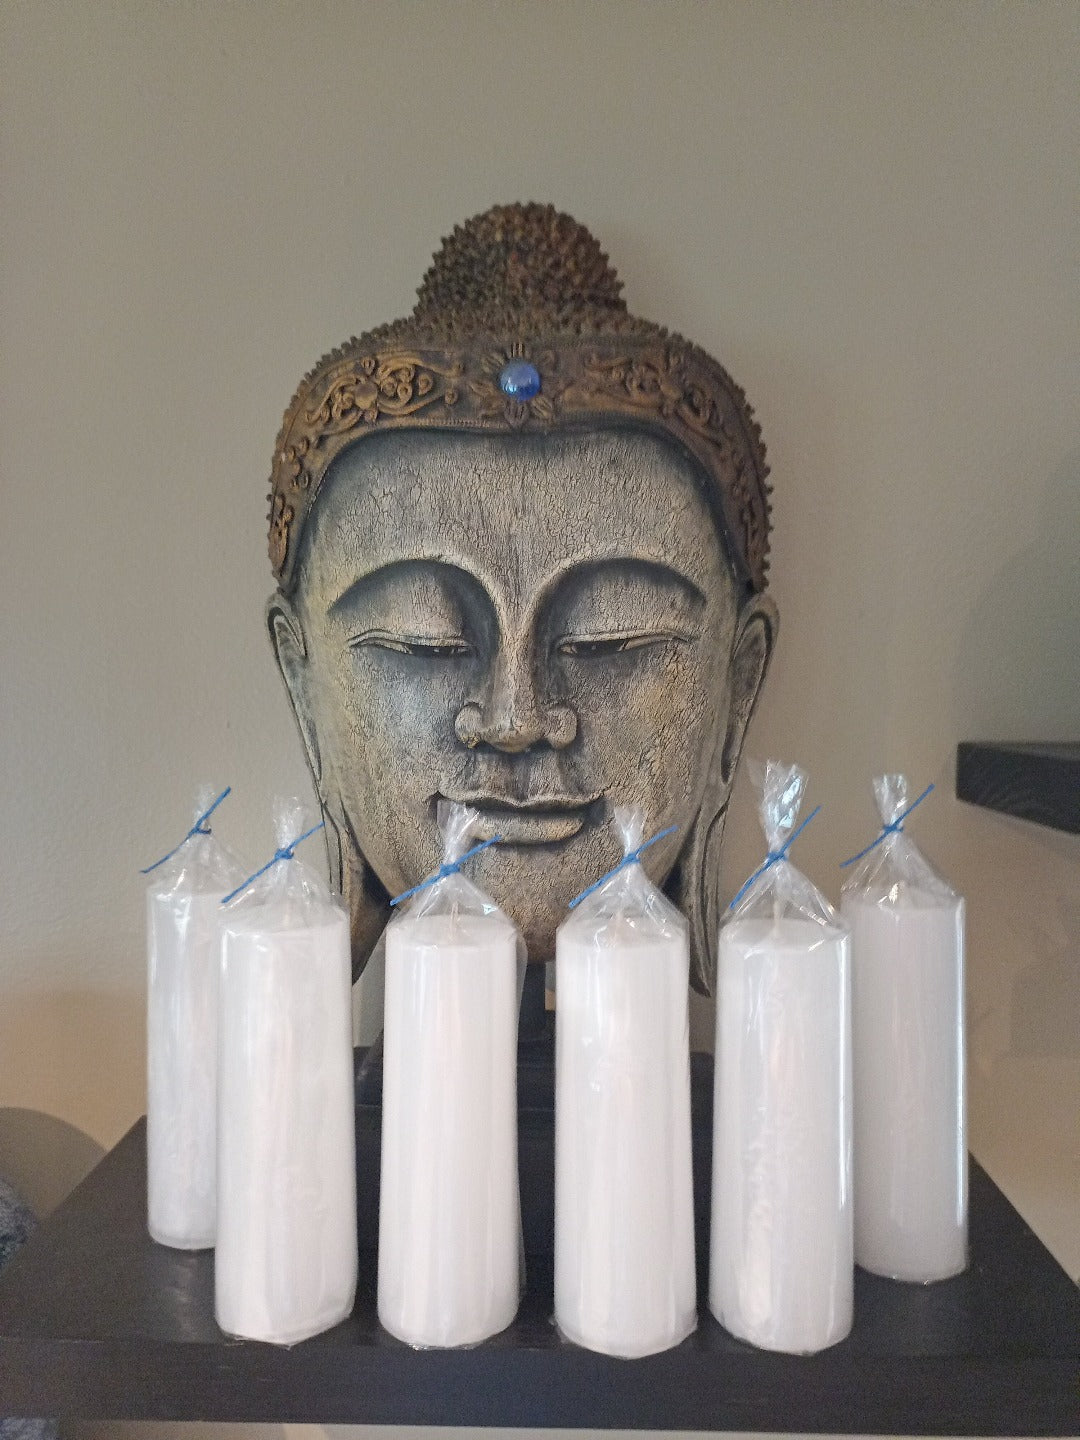 Plain white pillar candles